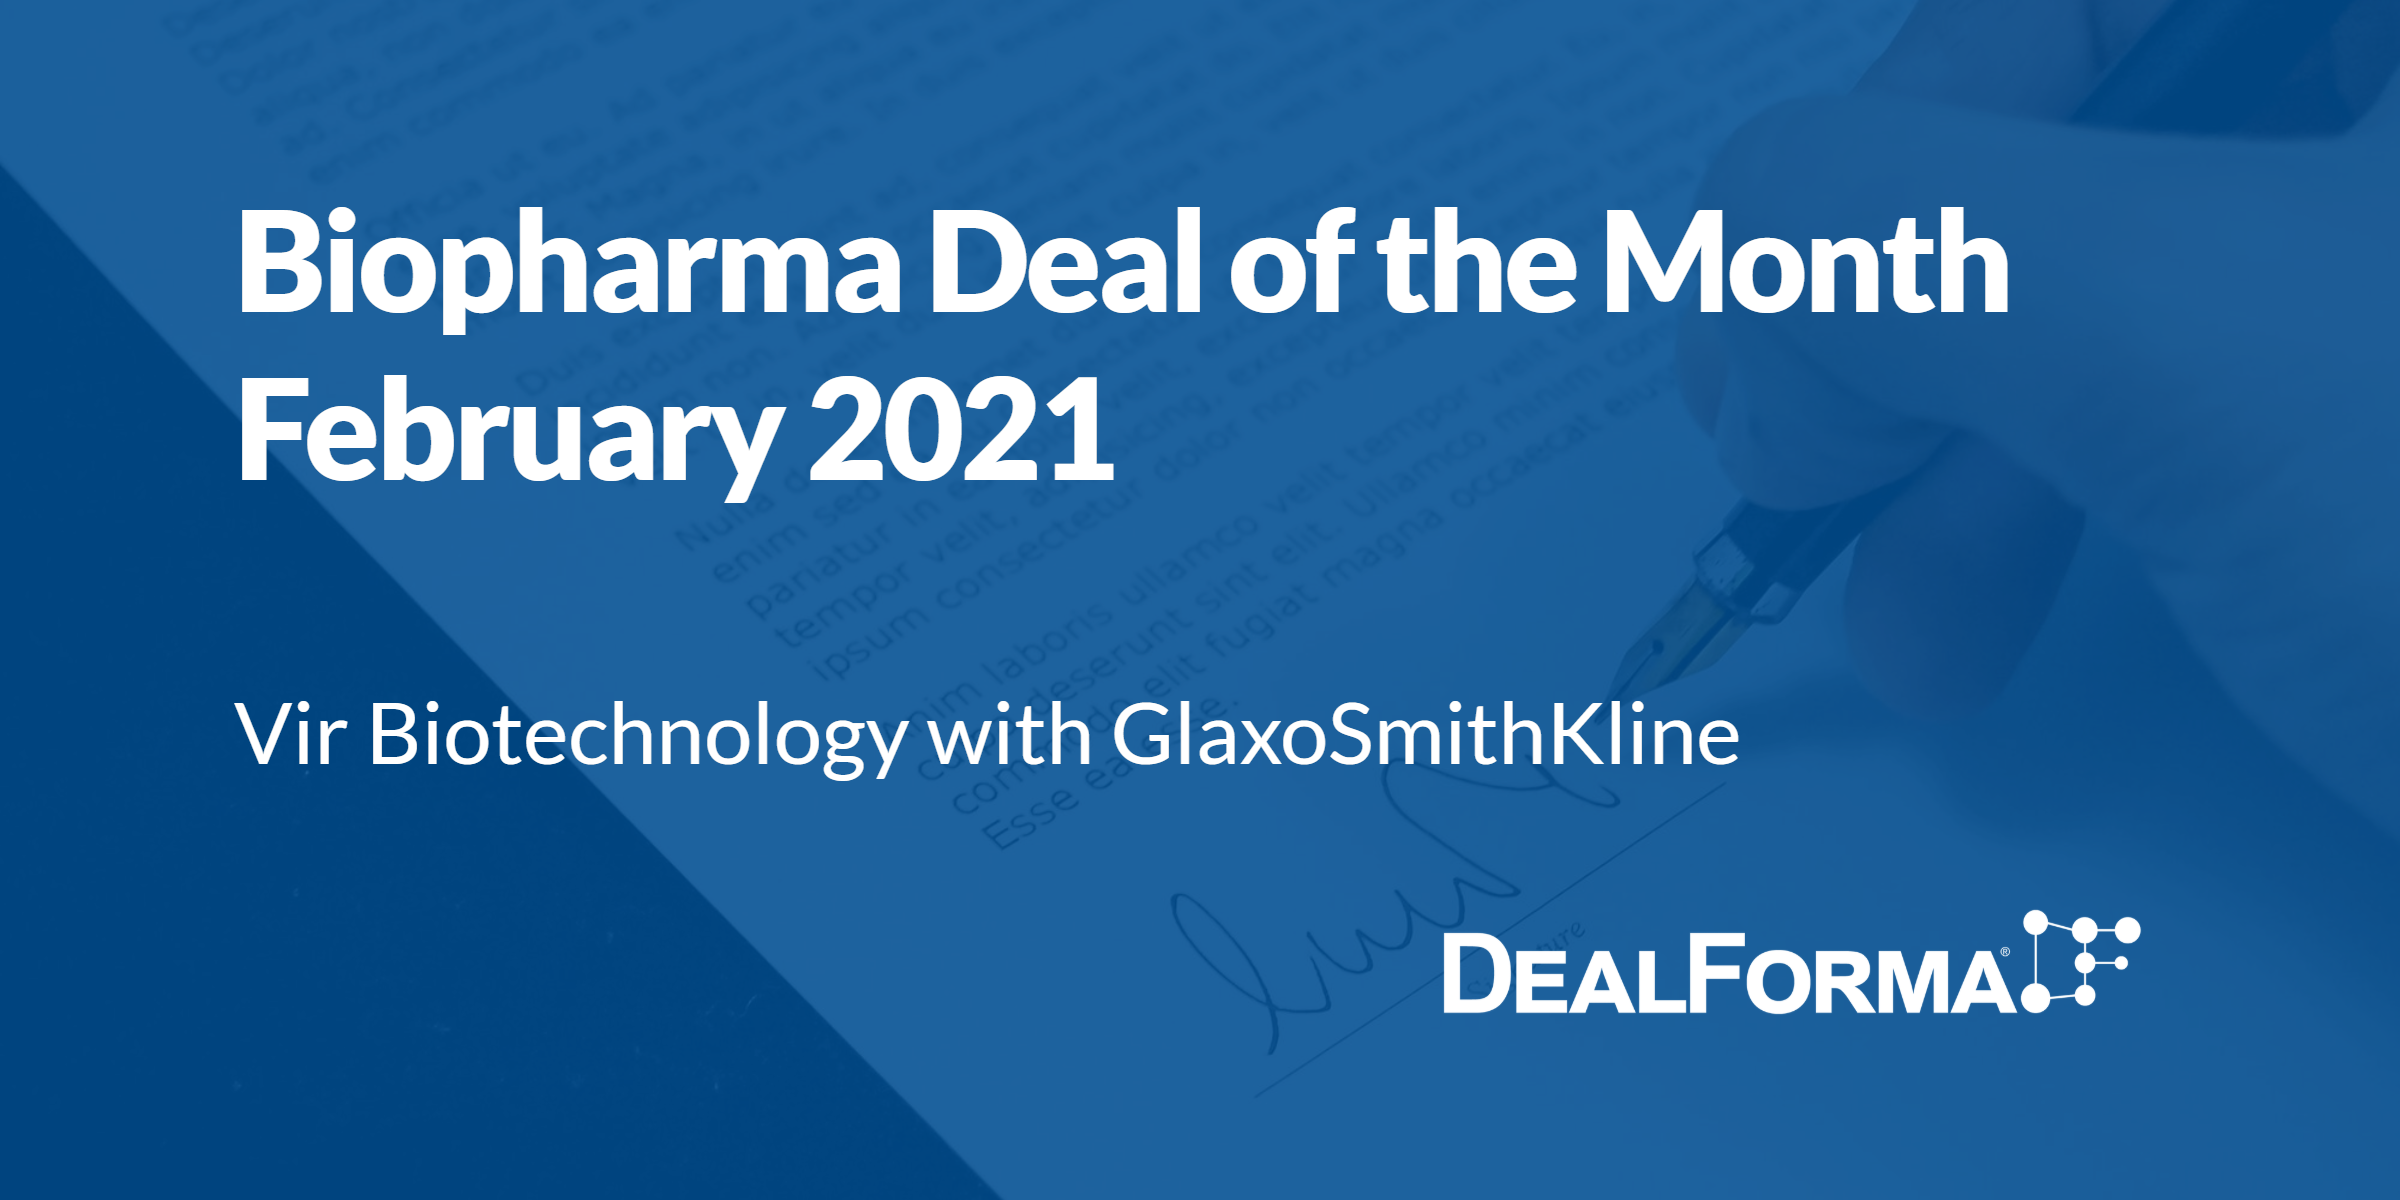 Top biopharma deal upfront Feb 2021